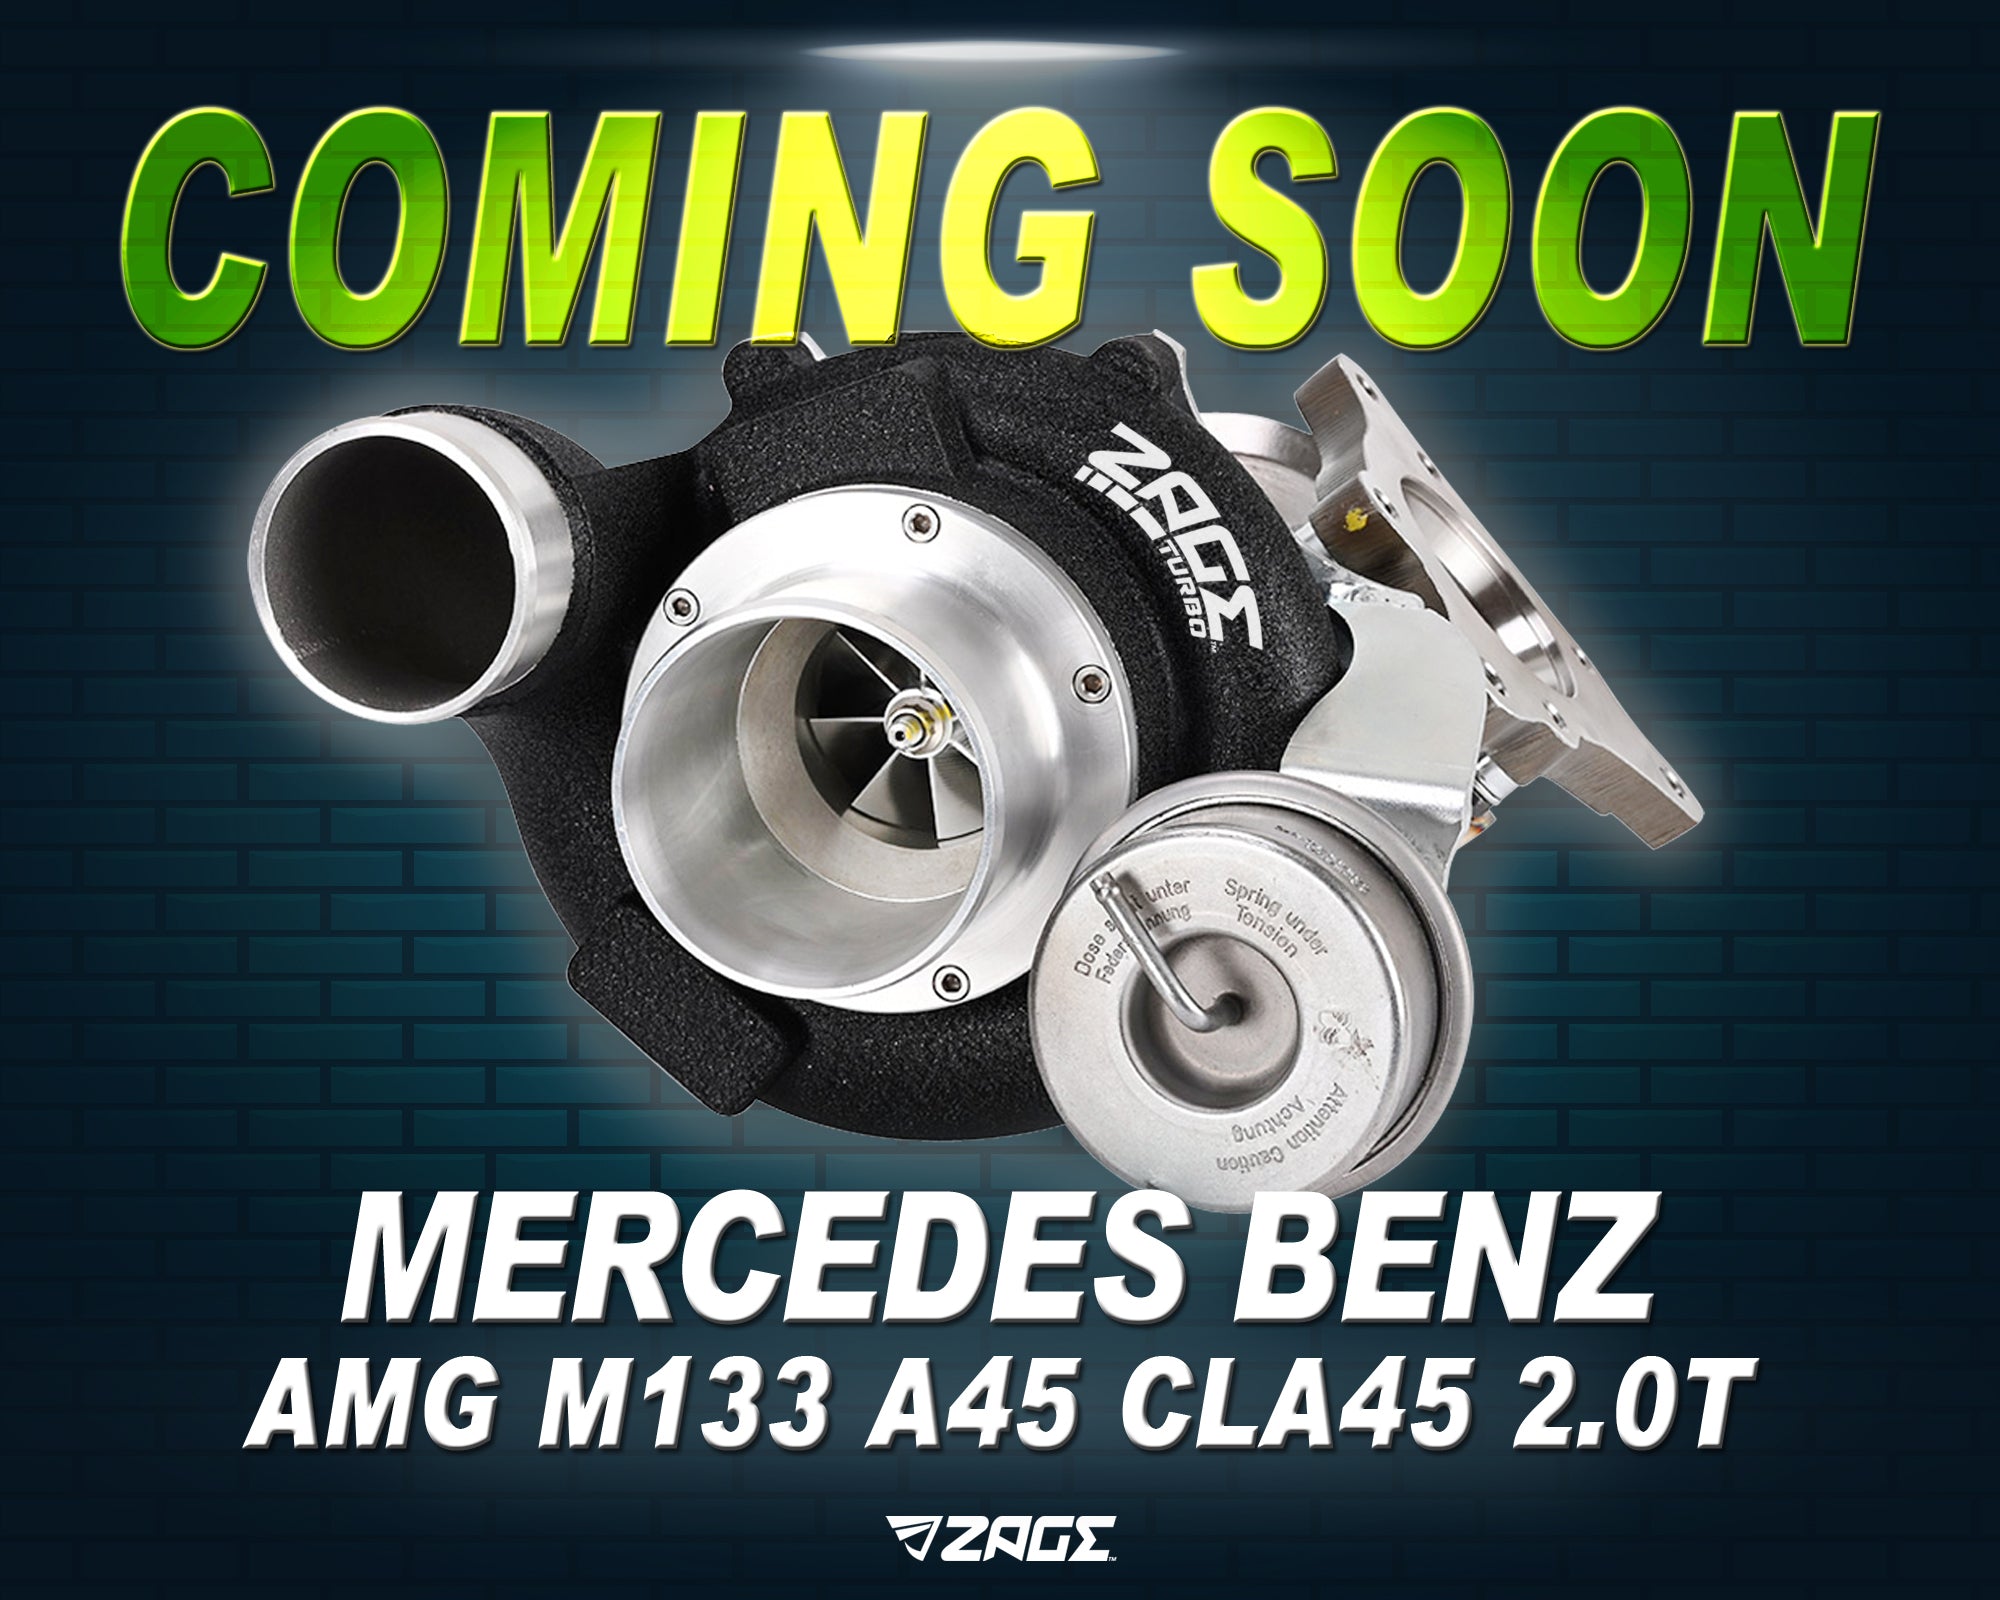 Mercedes Benz AMG M133 A45 CLA45 2.0T Turbocharger on Sale